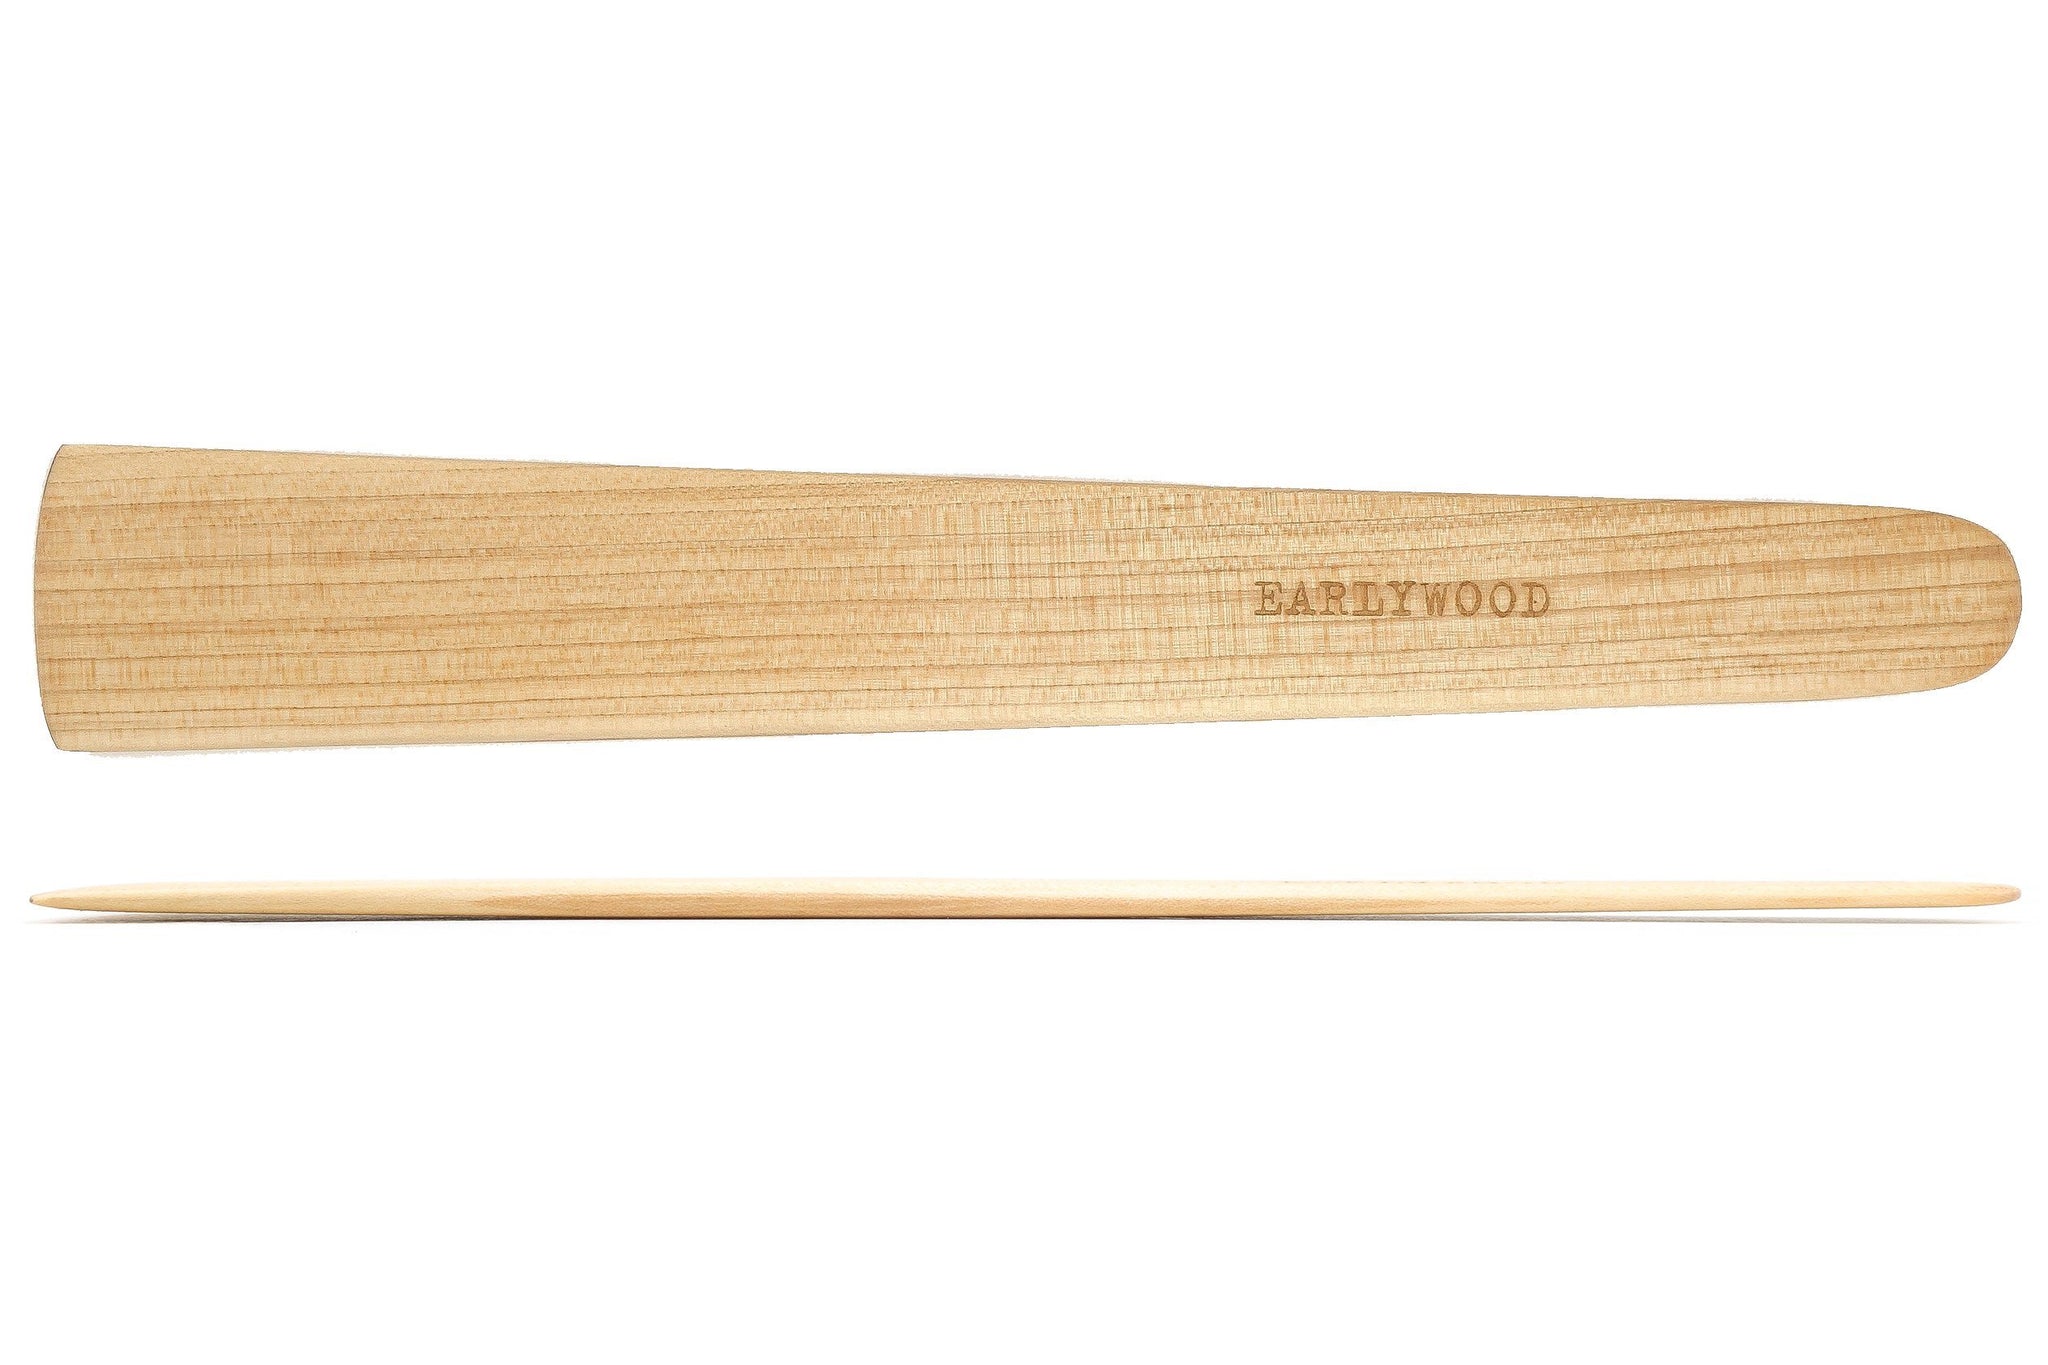 Wood Stir Sticks - Bodi Company, Inc.